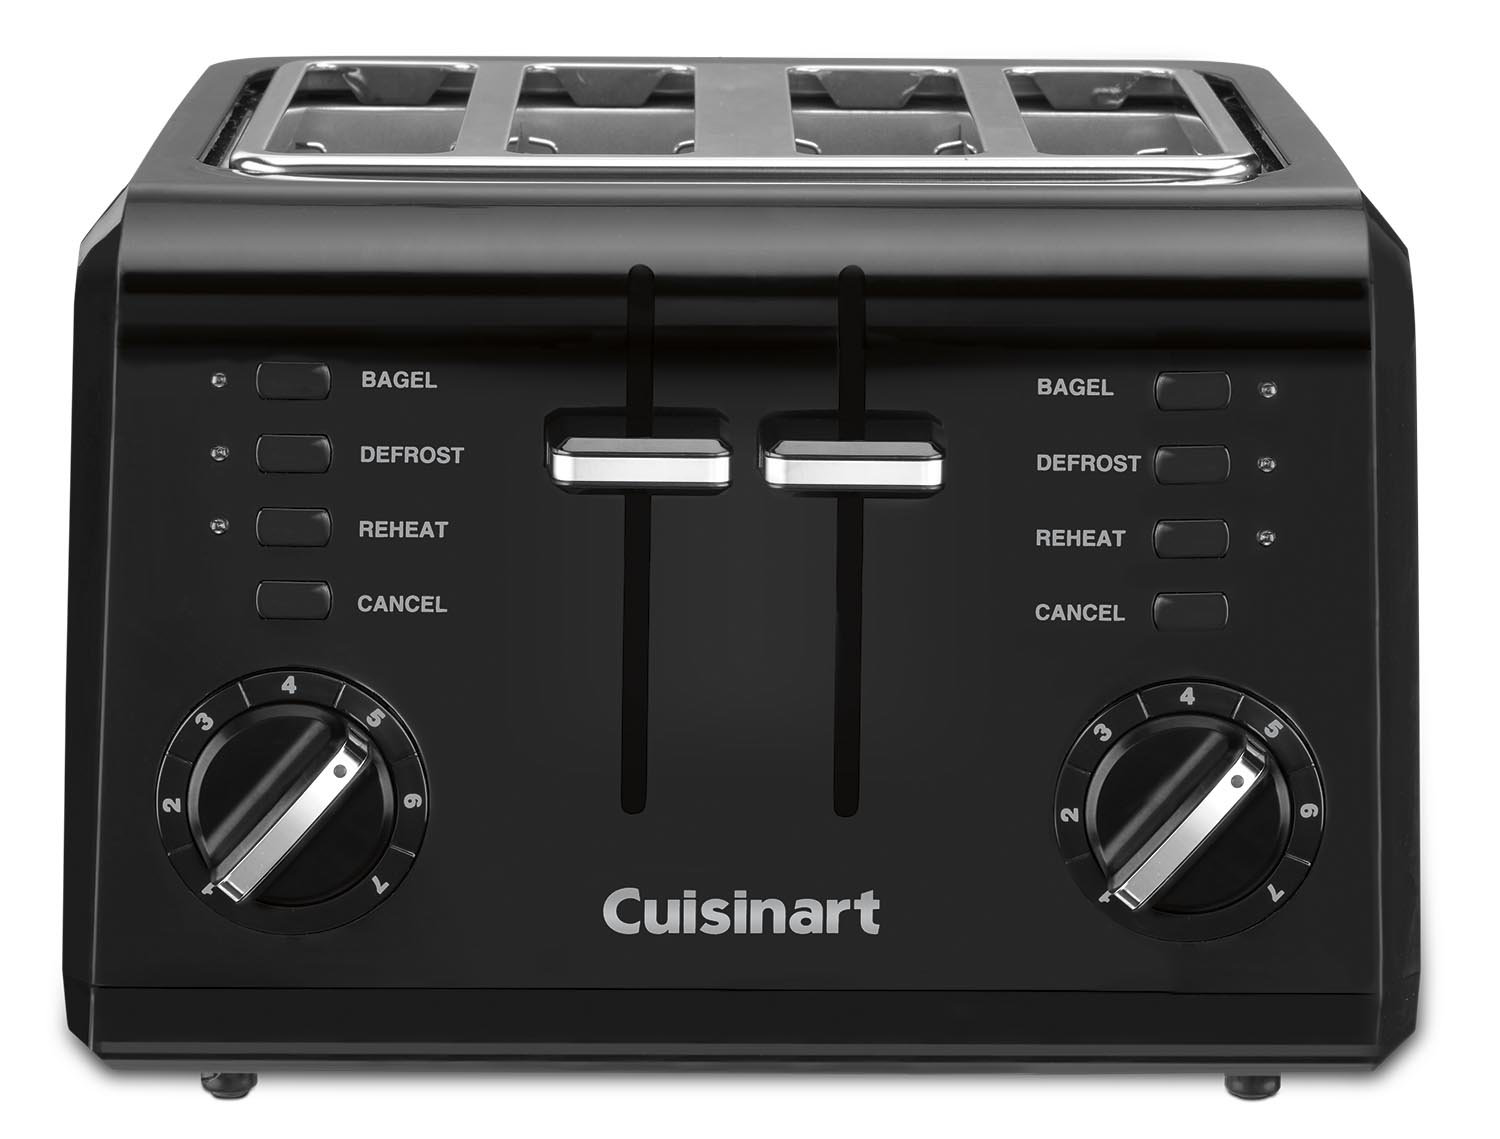 Cuisinart - Custom Select 4-Slice Toaster